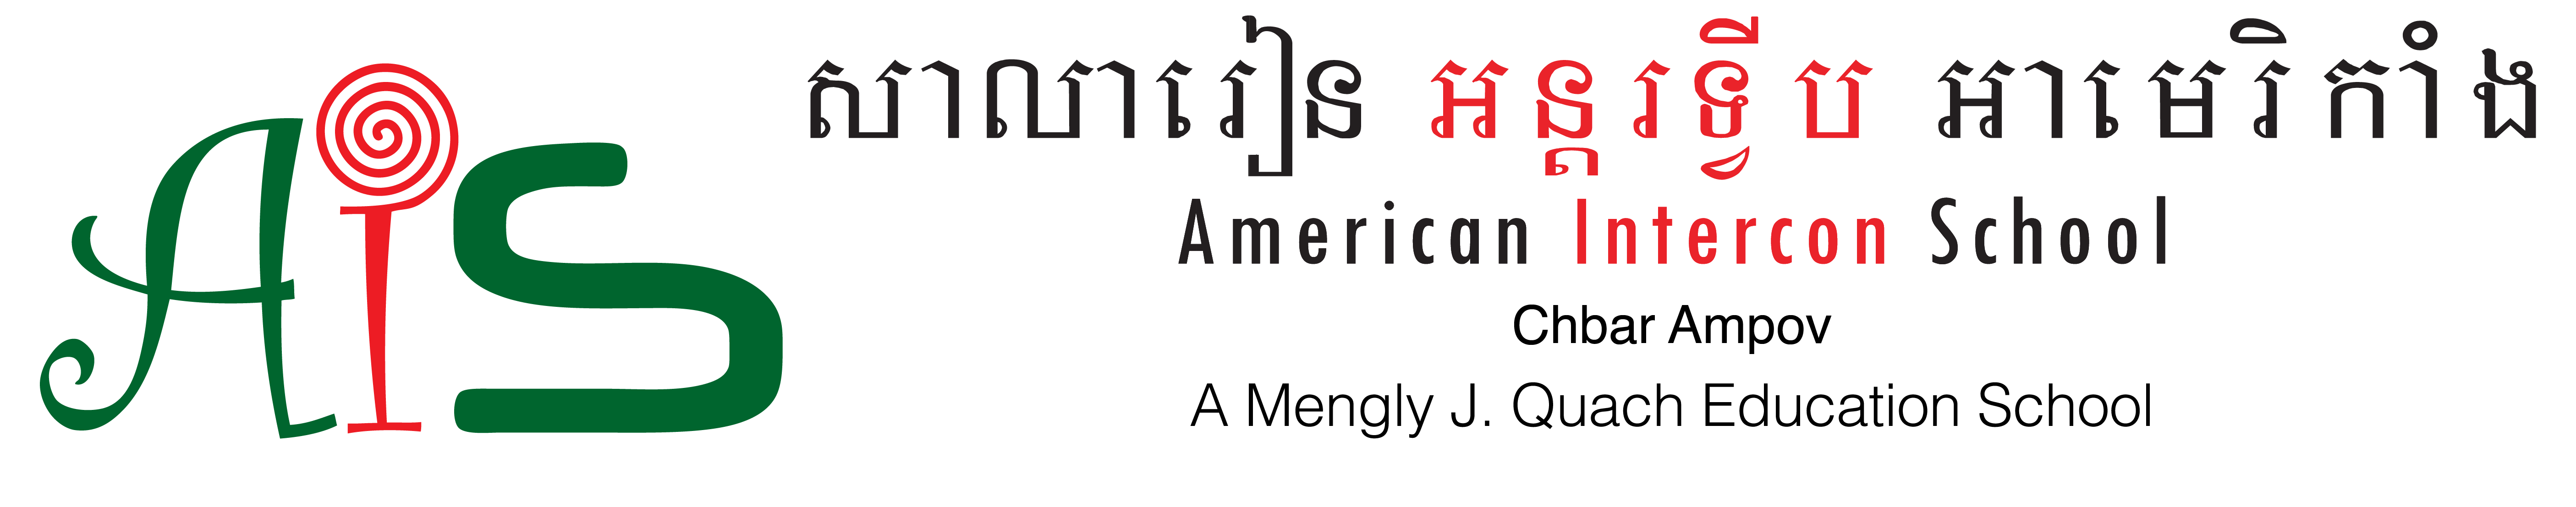 AIS_Logo_Final-21.png